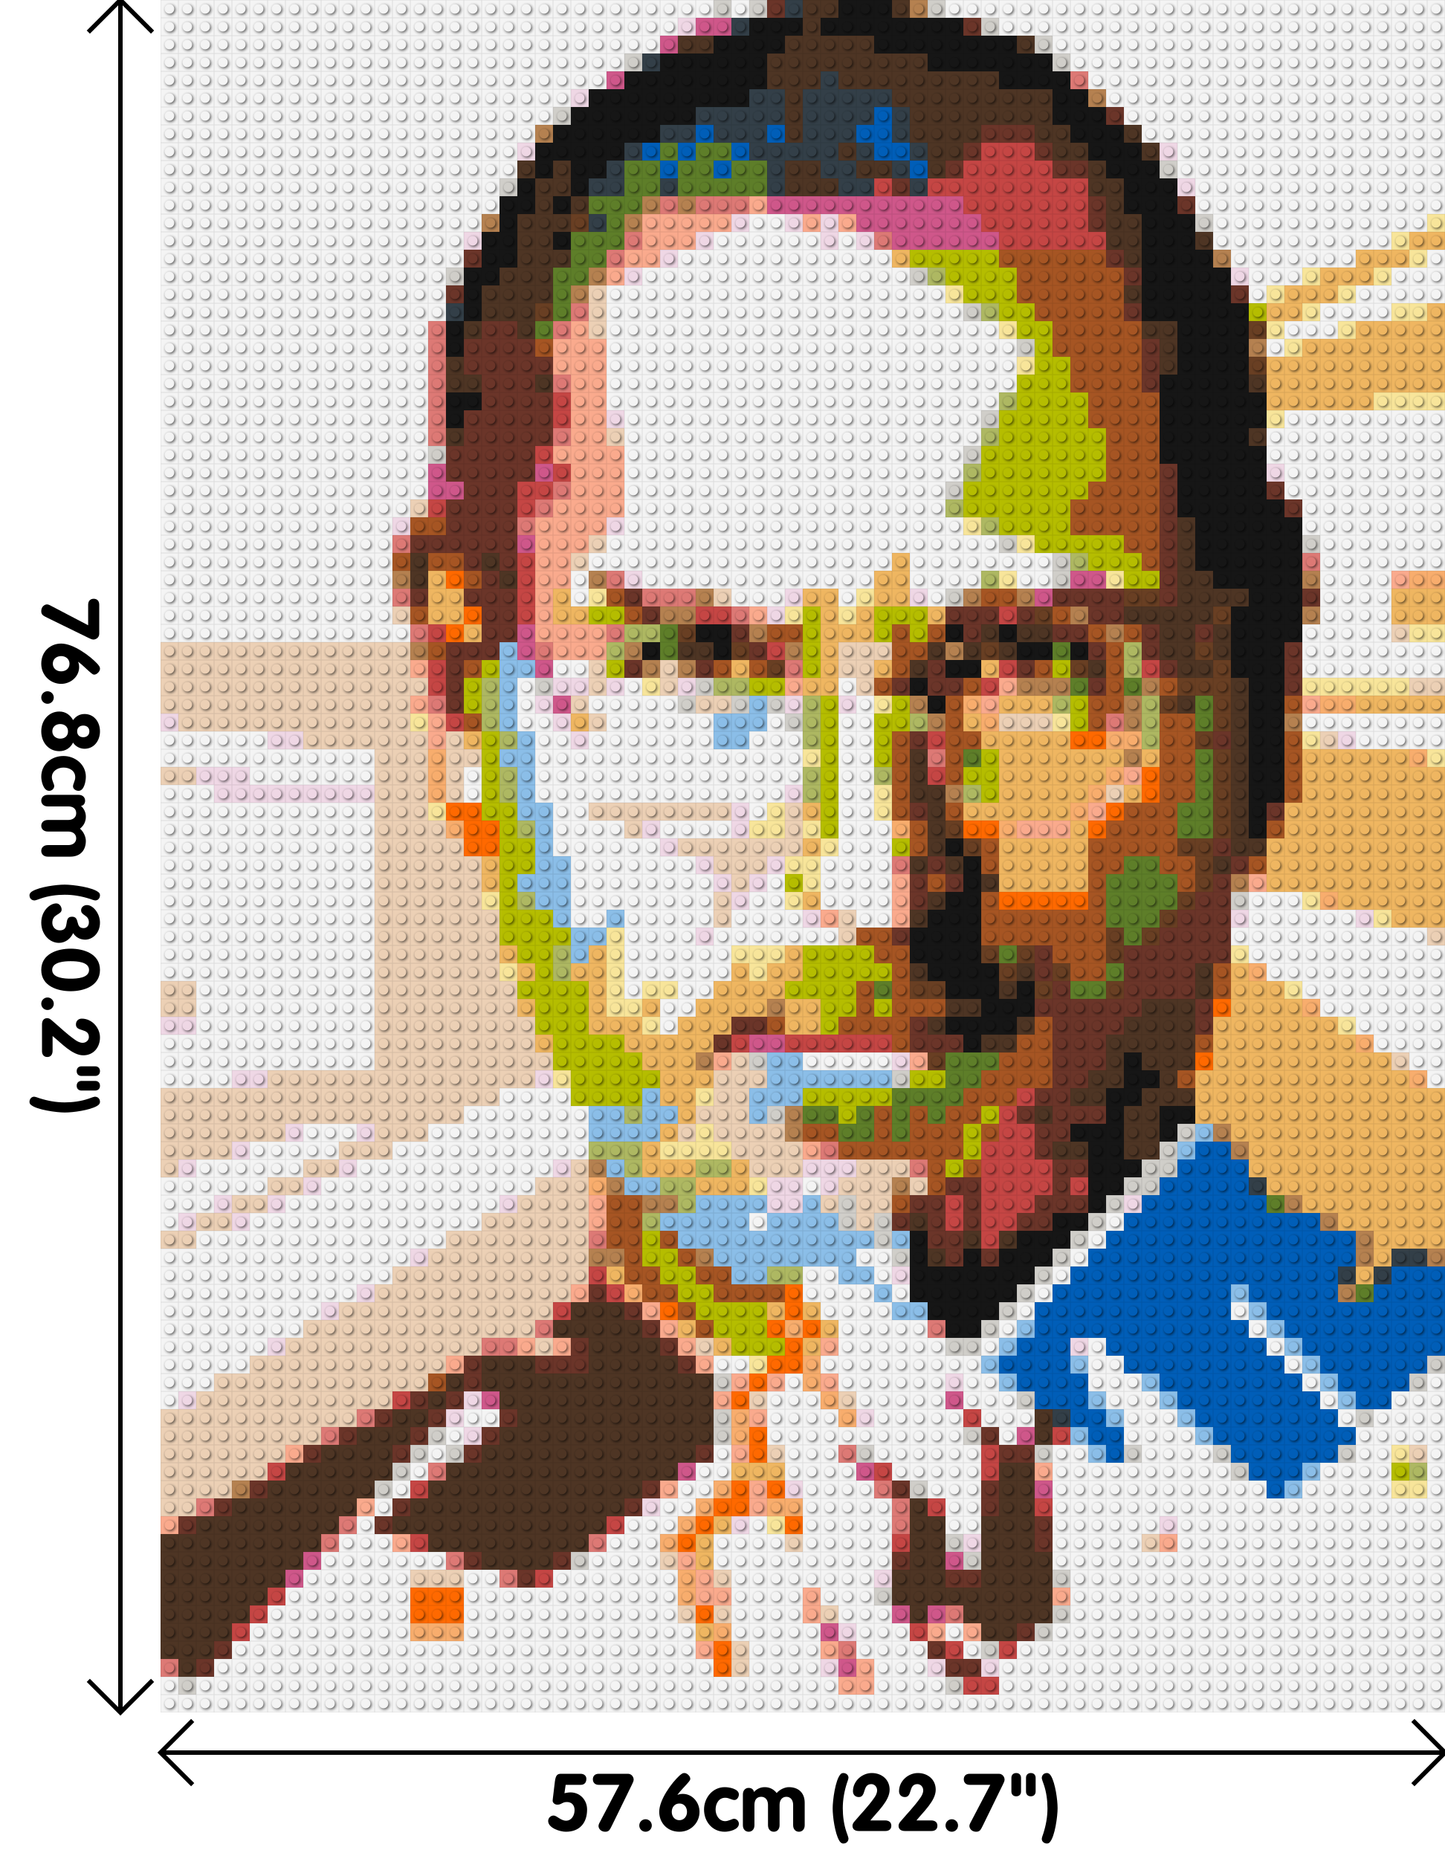 Steve Jobs - Brick Art Mosaic Kit